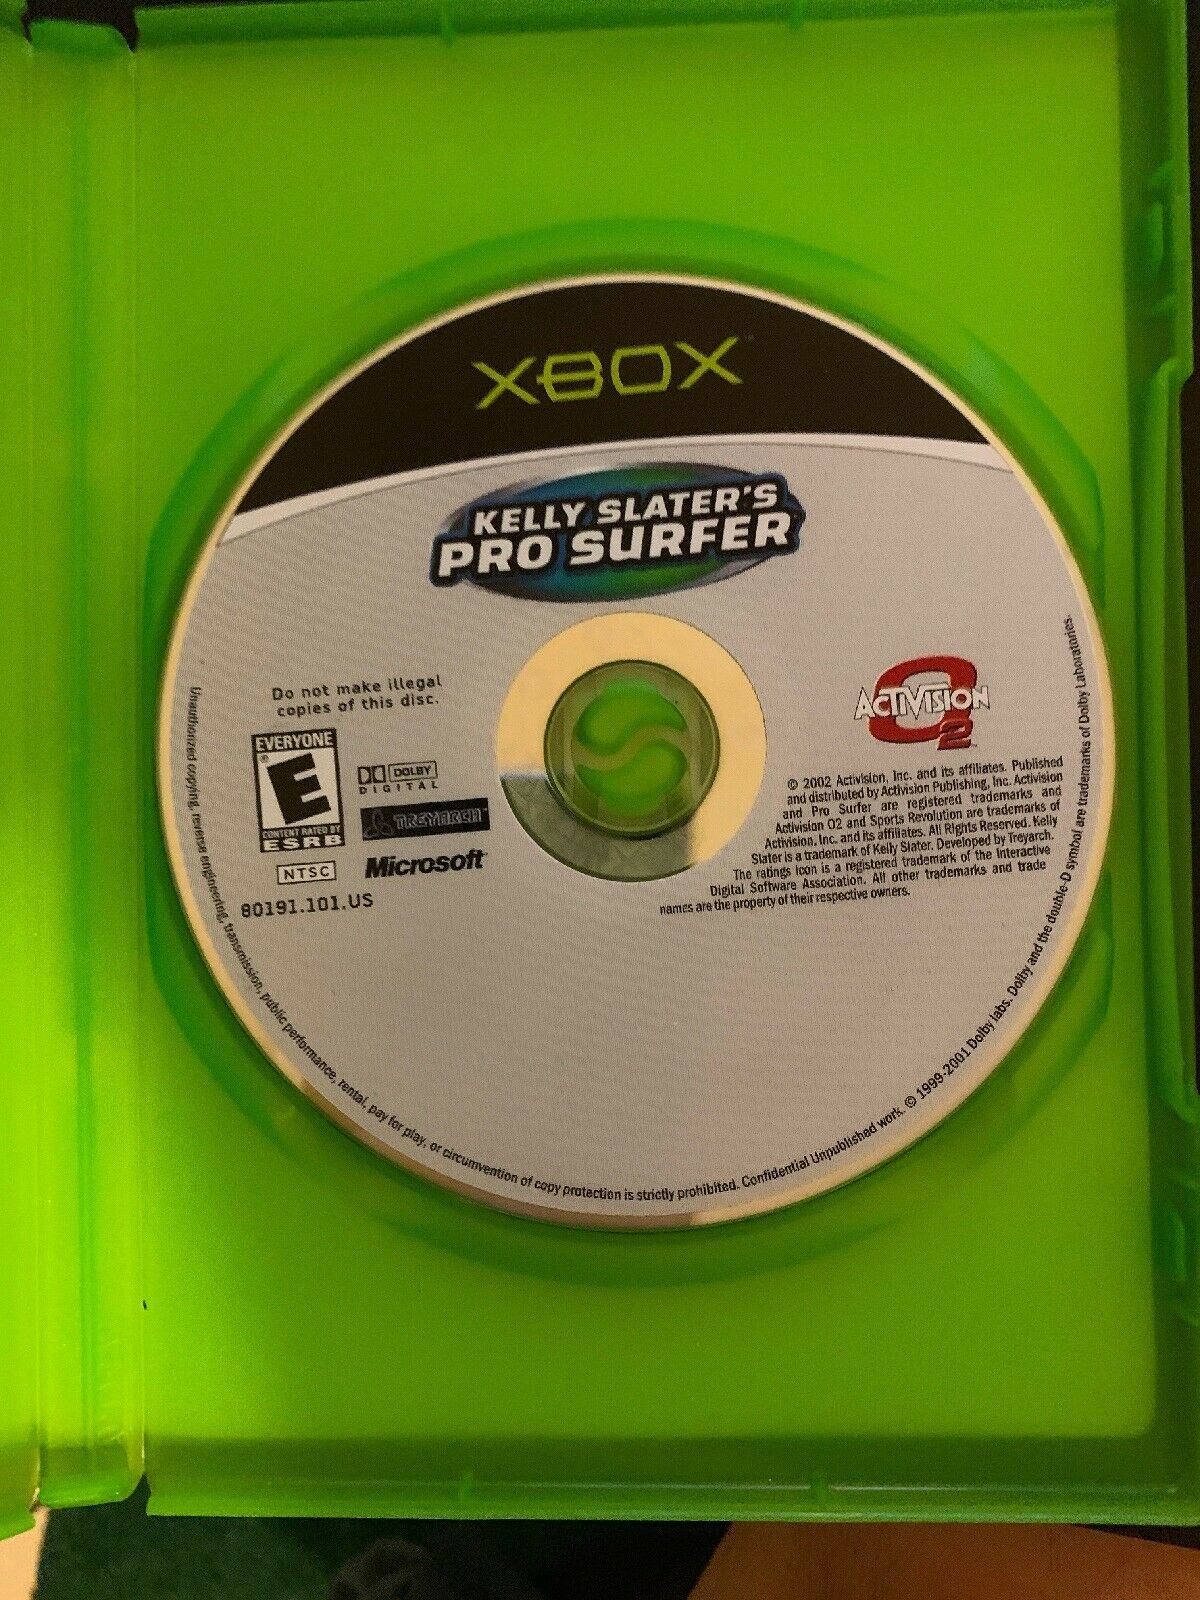 Kelly Slater's Pro Surfer - Original Microsoft Xbox Game PAL